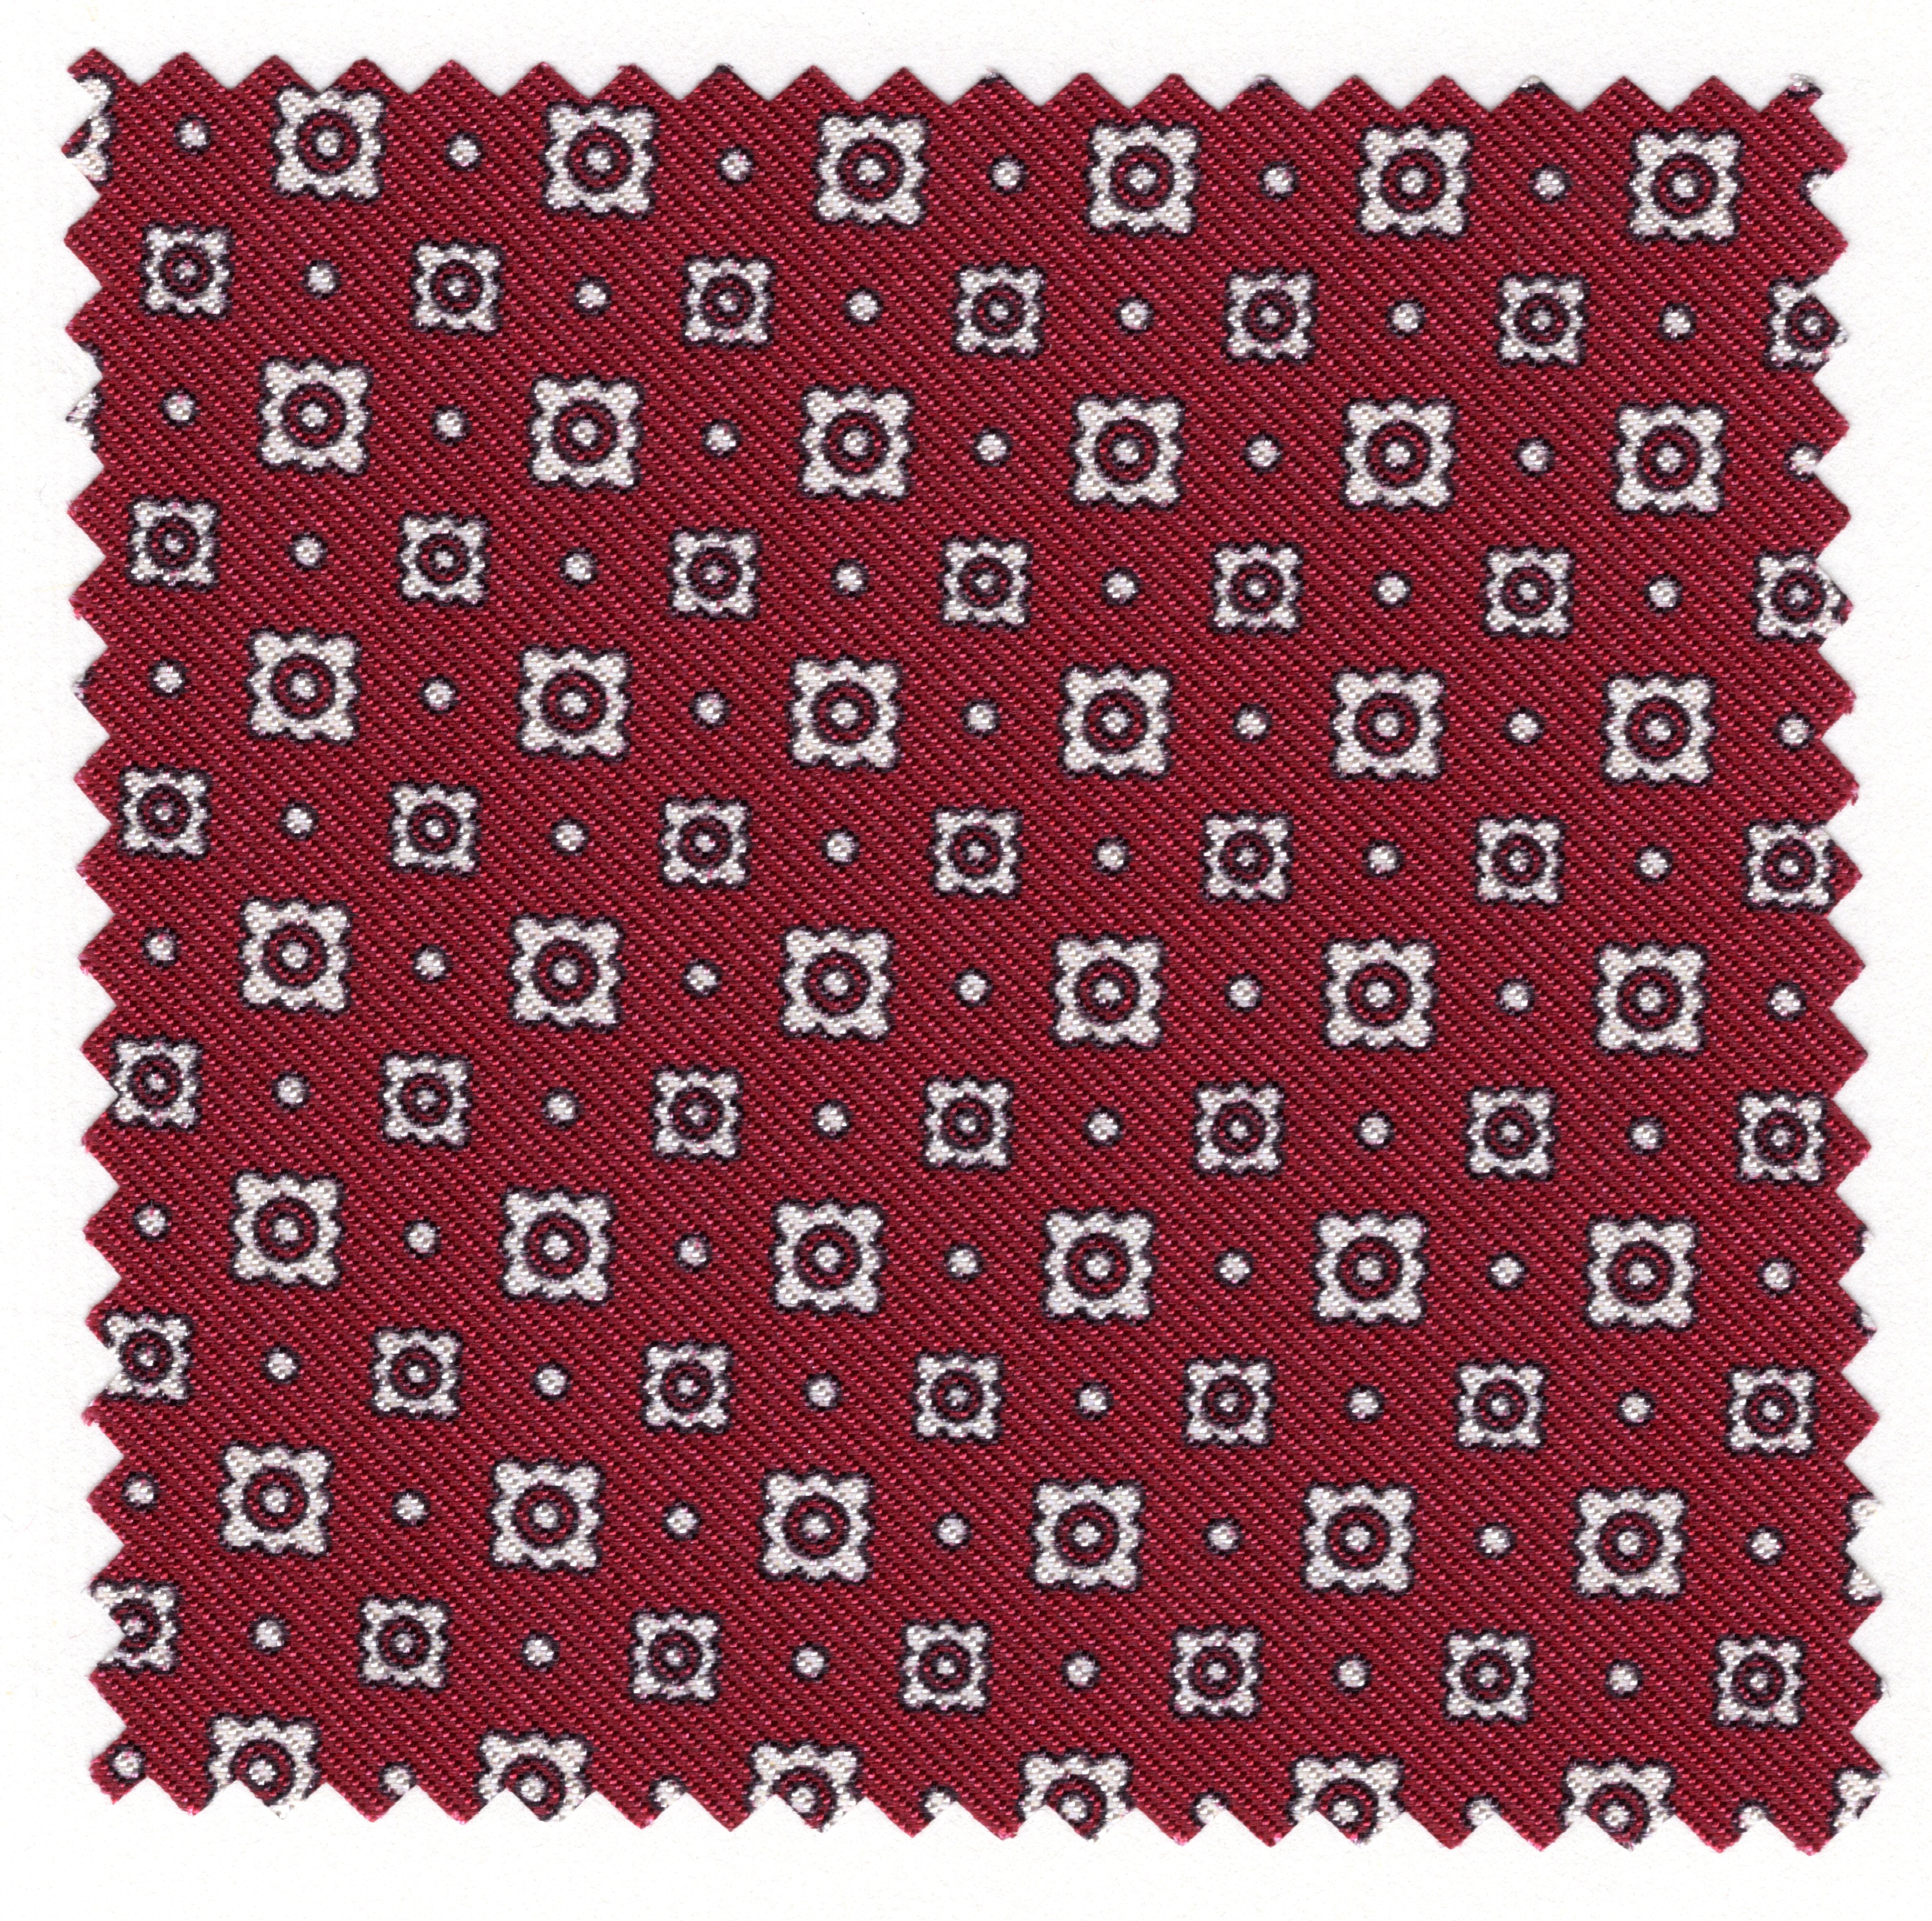 Tailored seven fold tie - micro pattern 9353-1